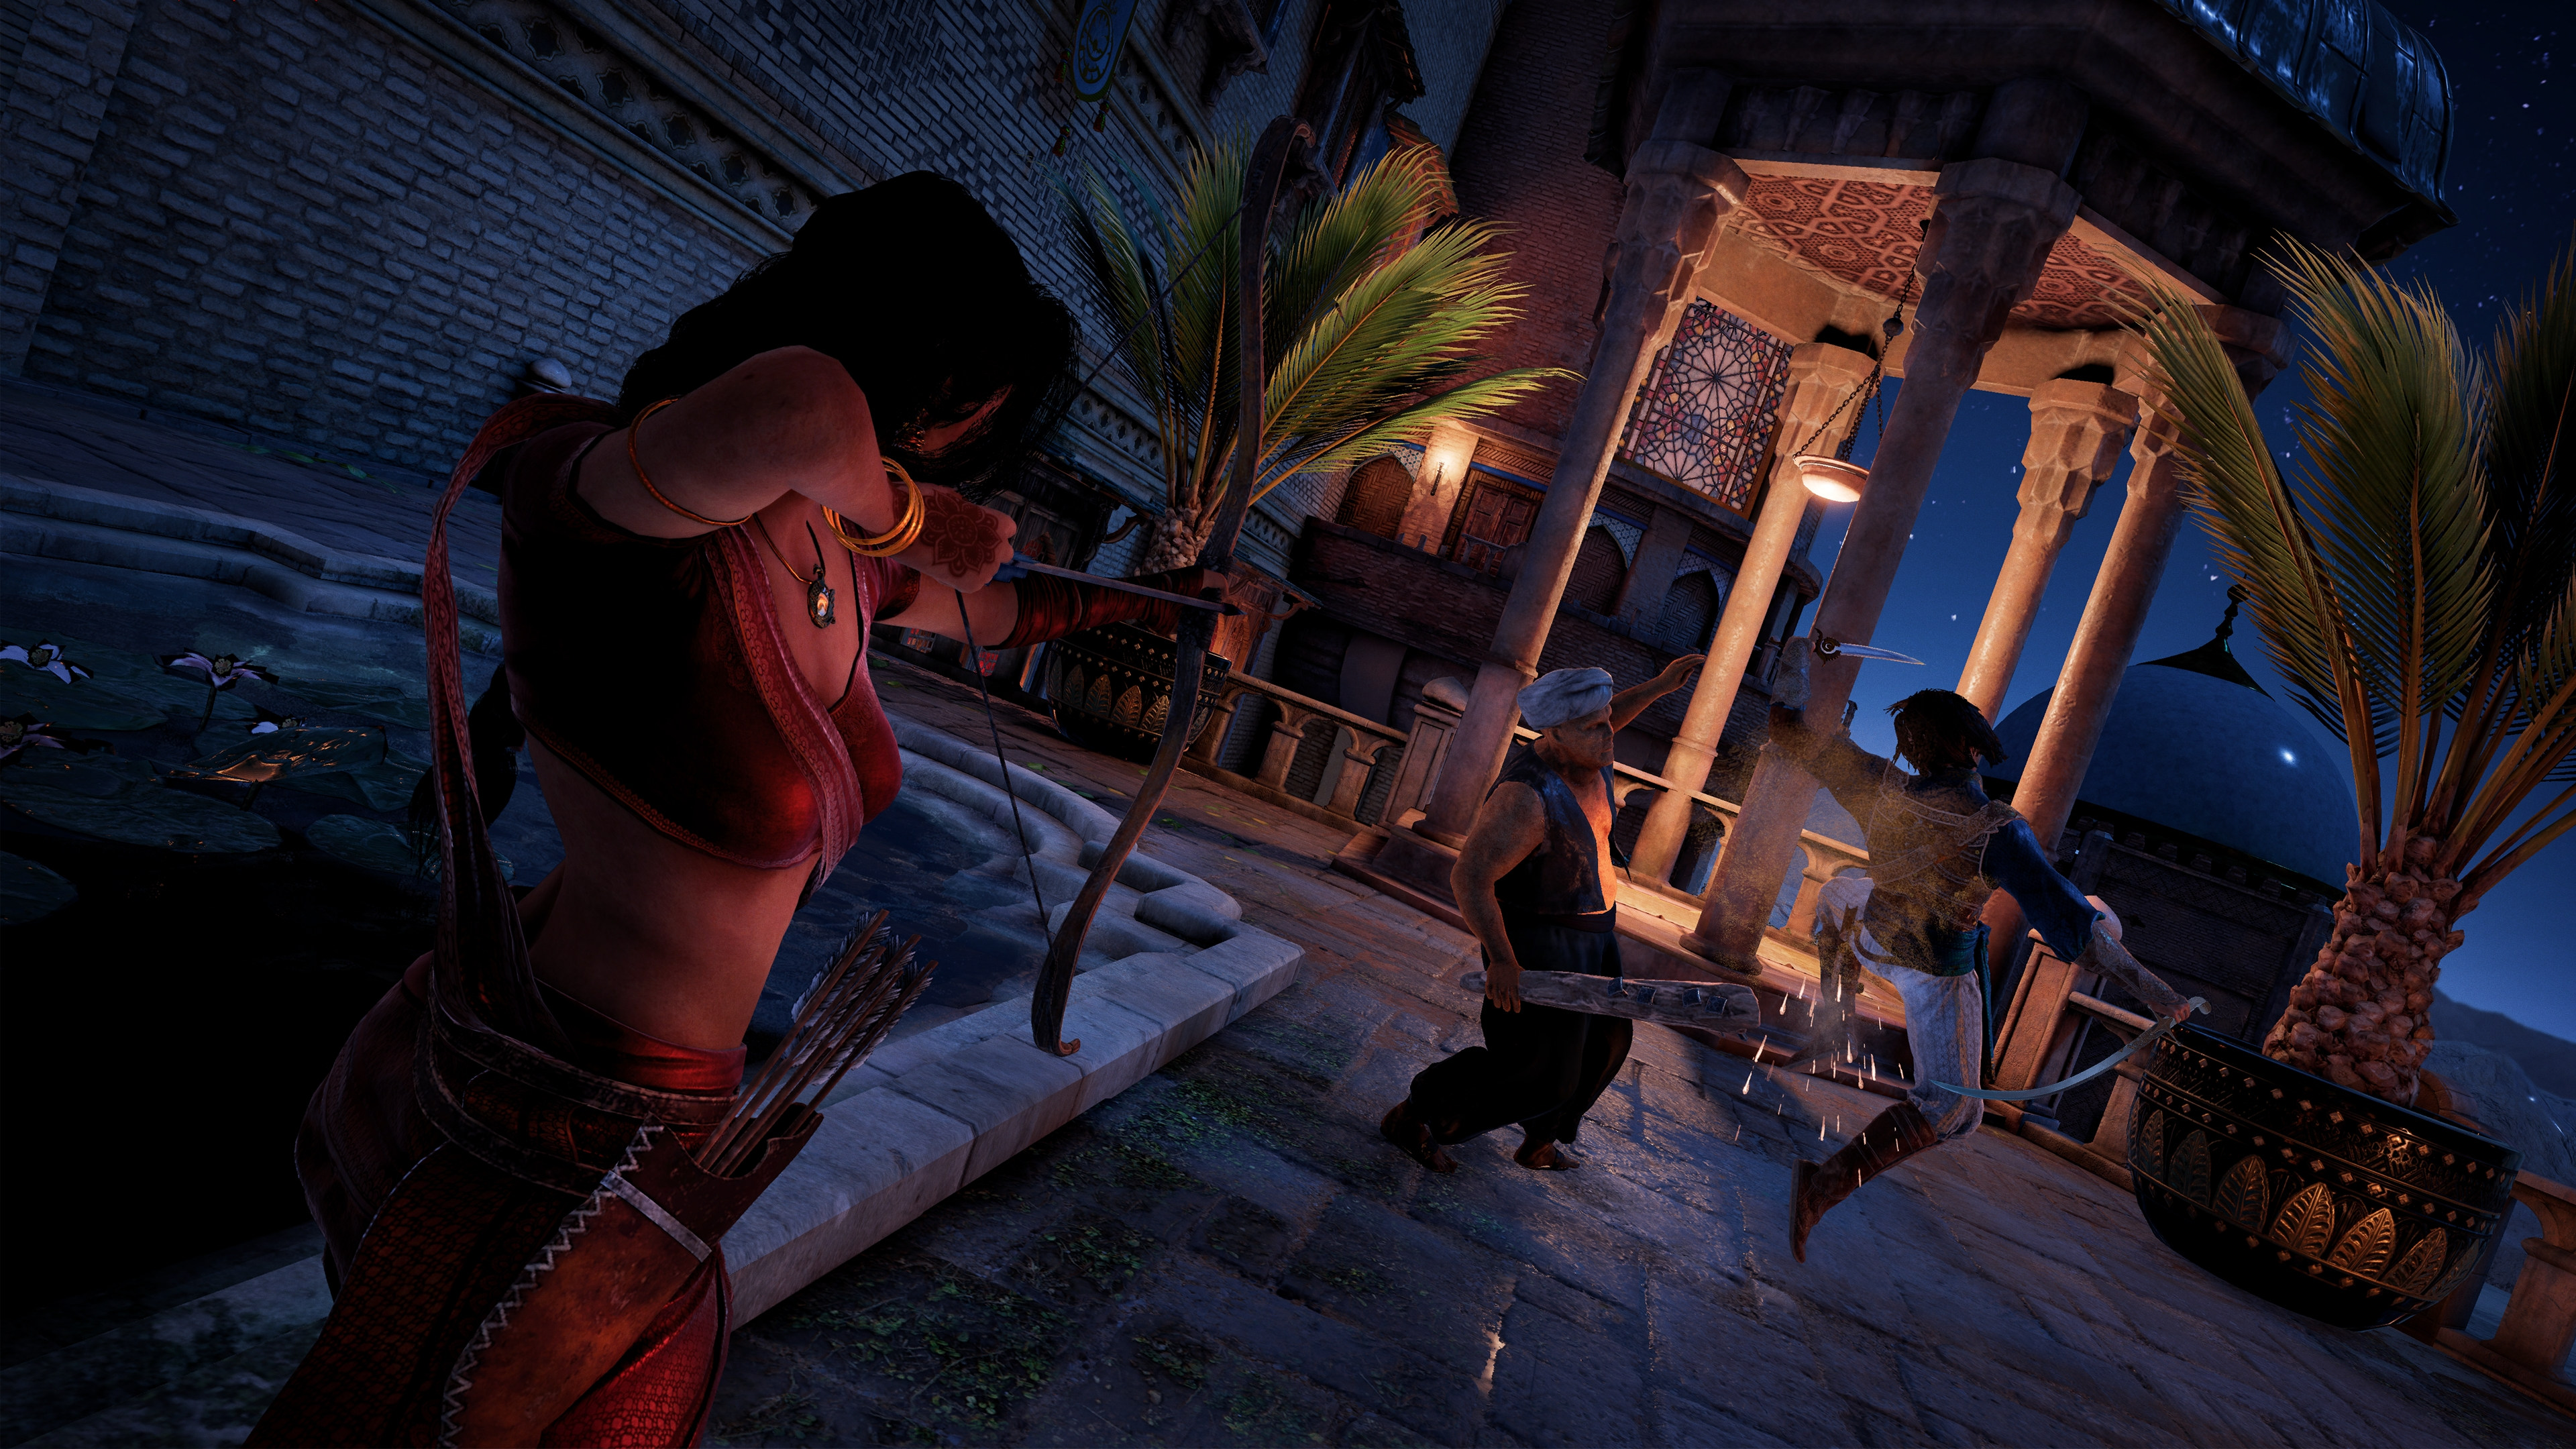 New Prince of Persia: Revelations screenshots